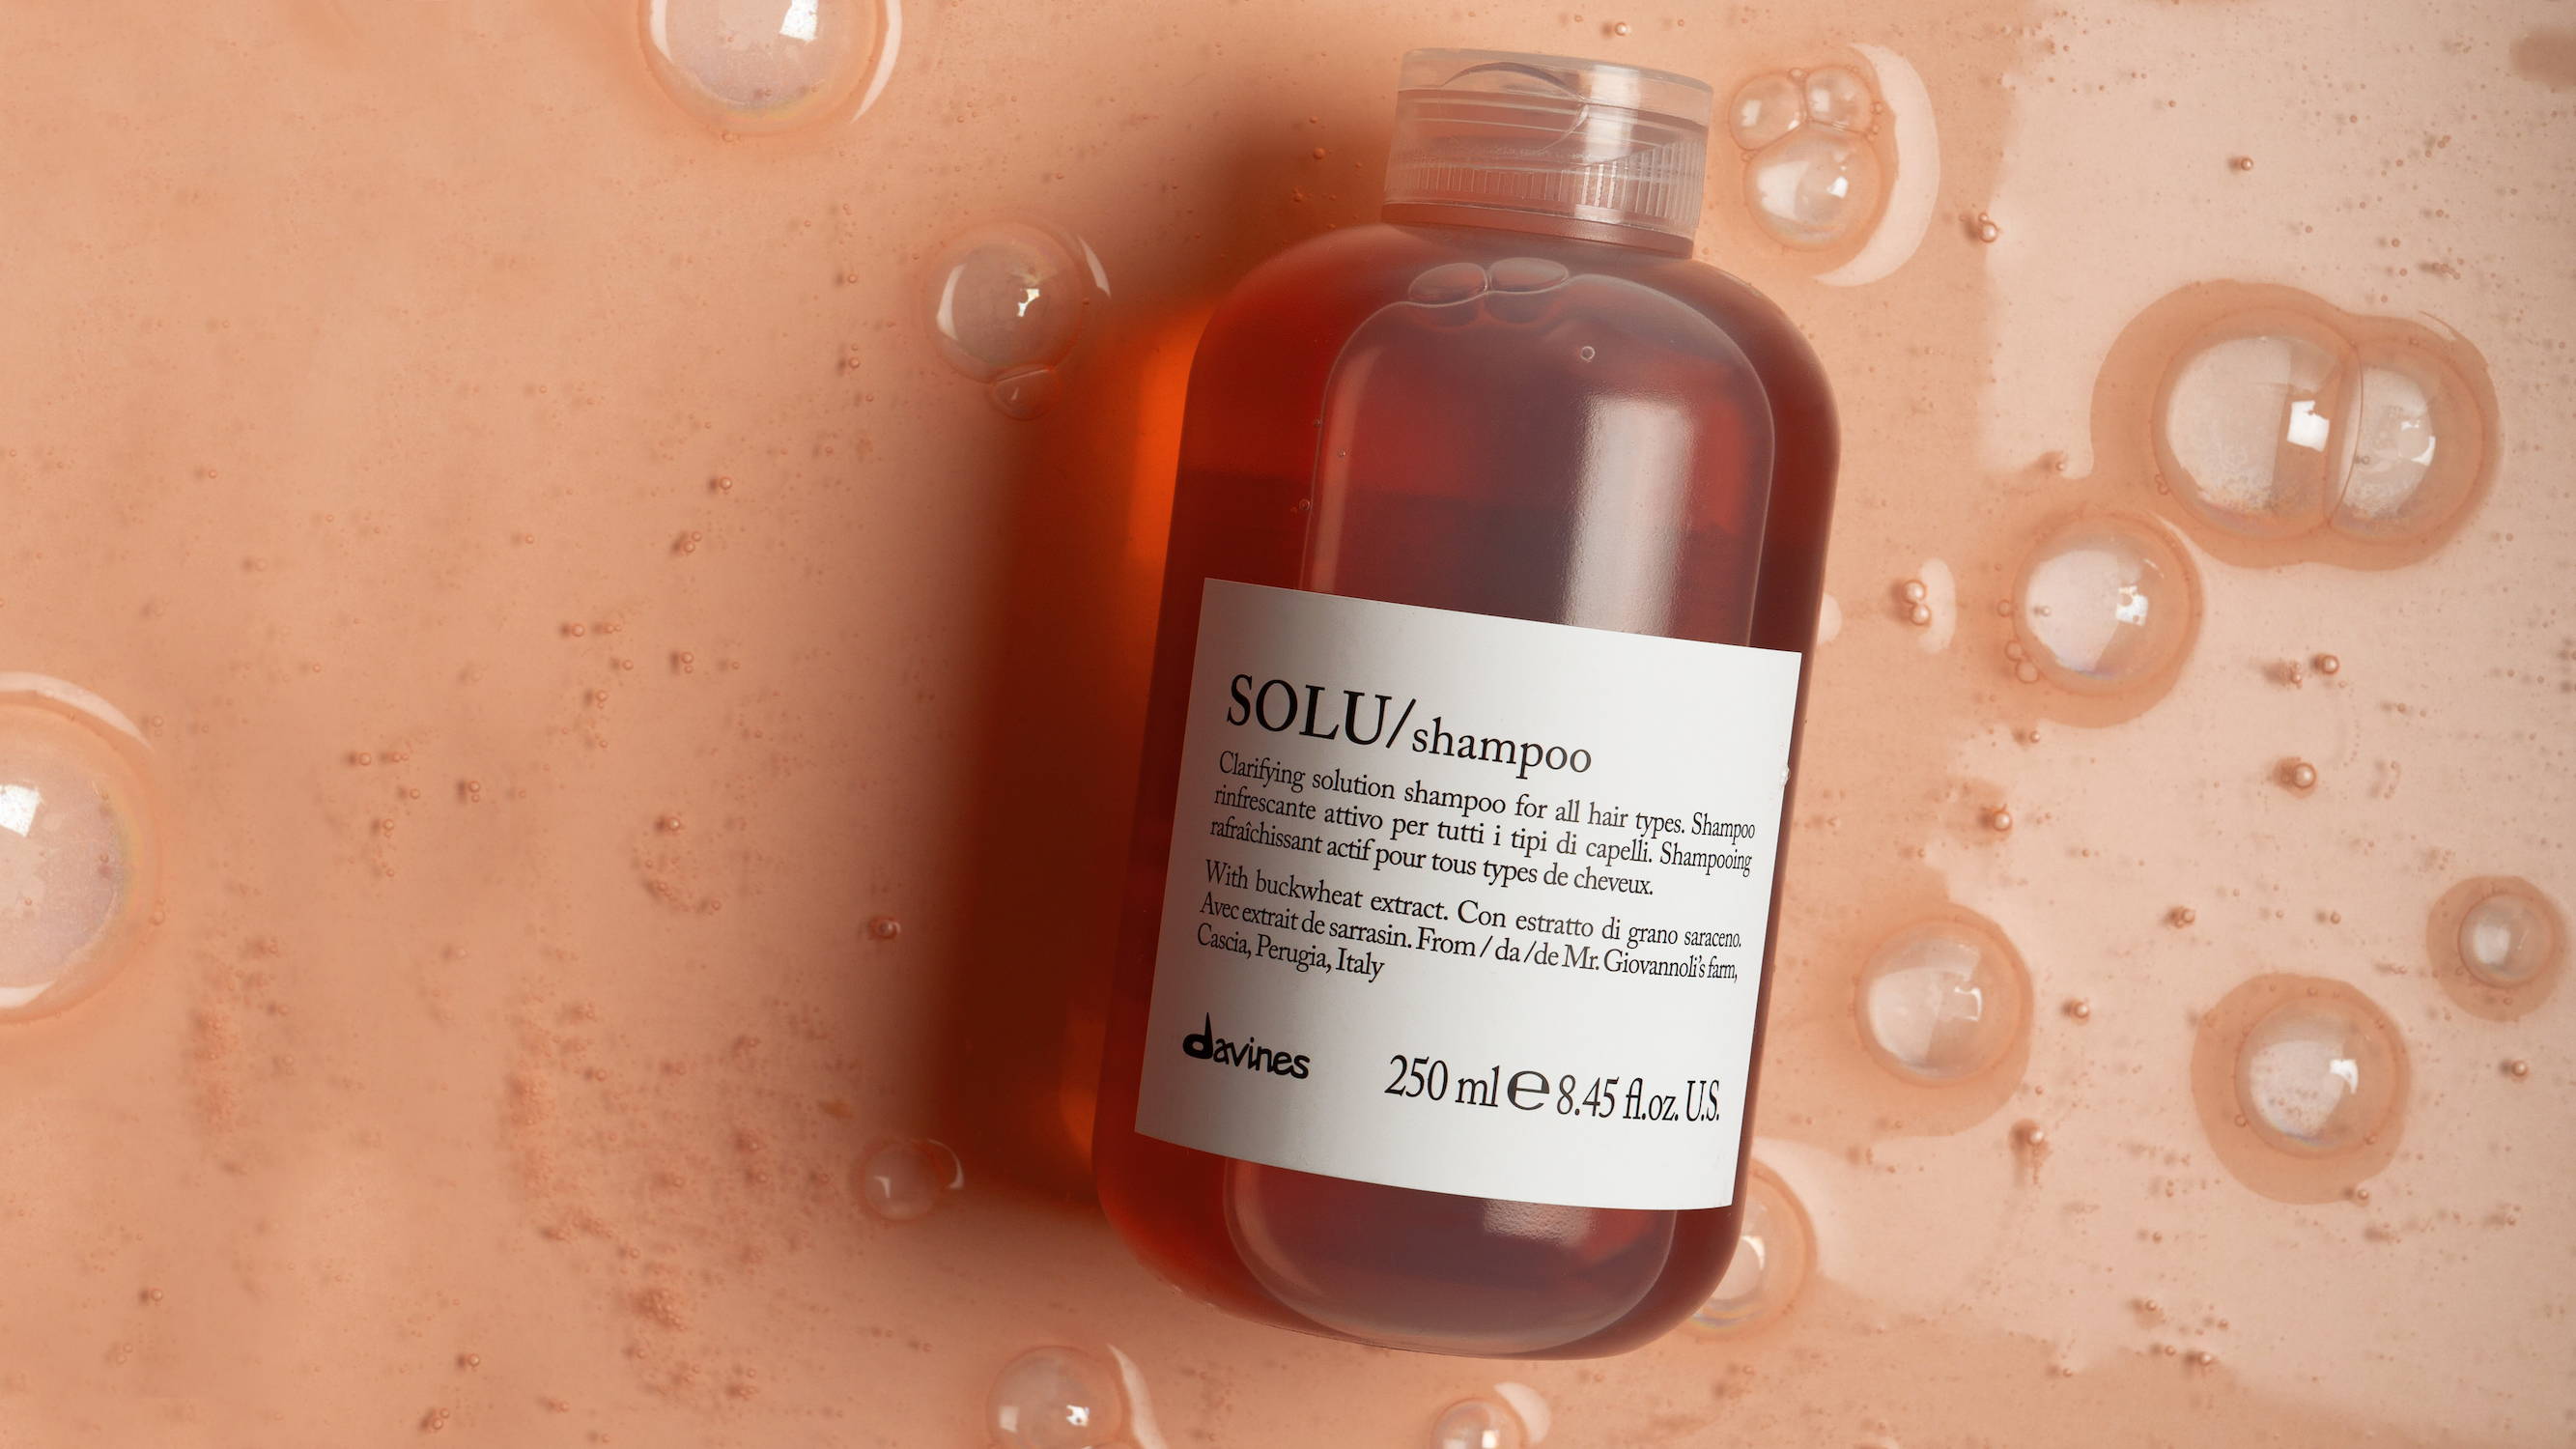 Davines solu shampoo for clarifying